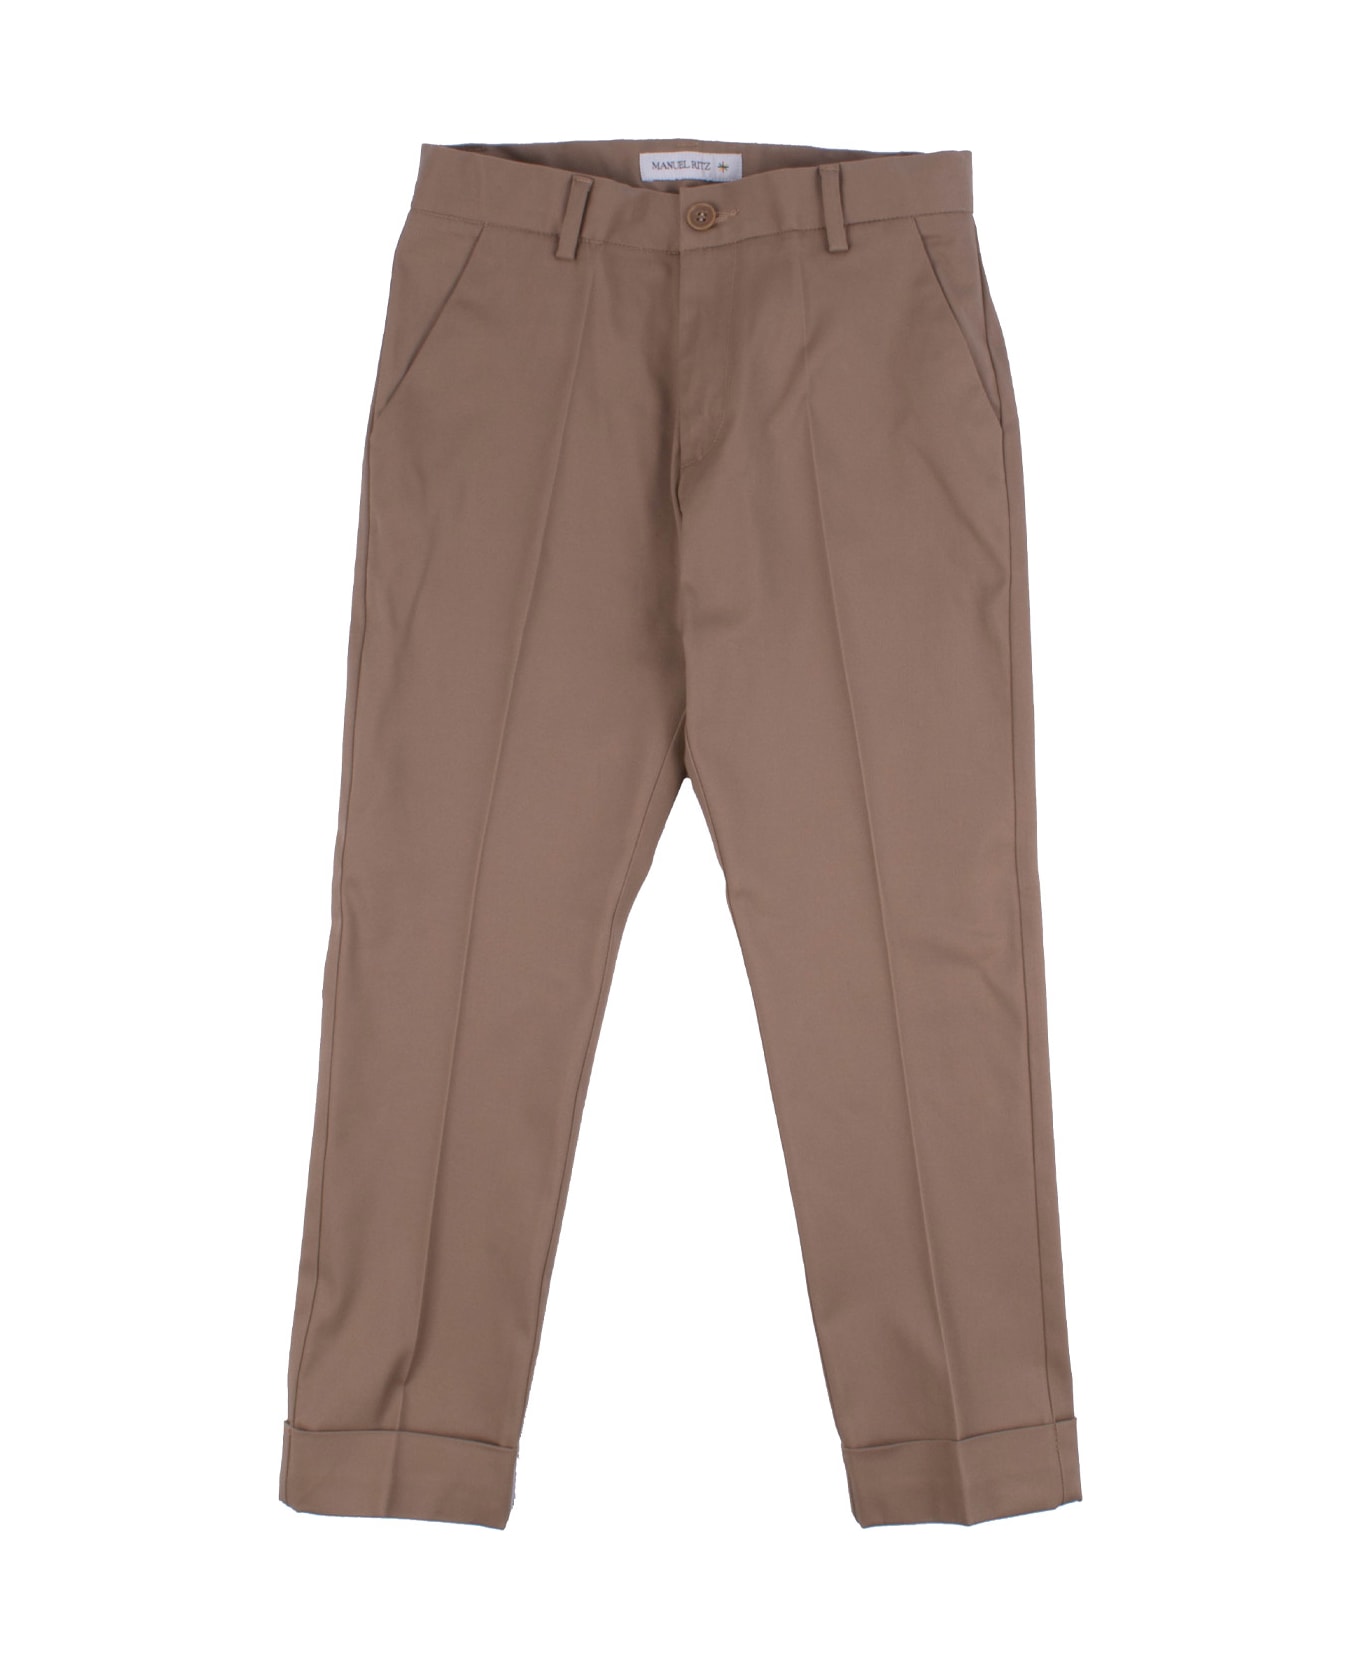 Manuel Ritz Cotton Pants - Brown ボトムス